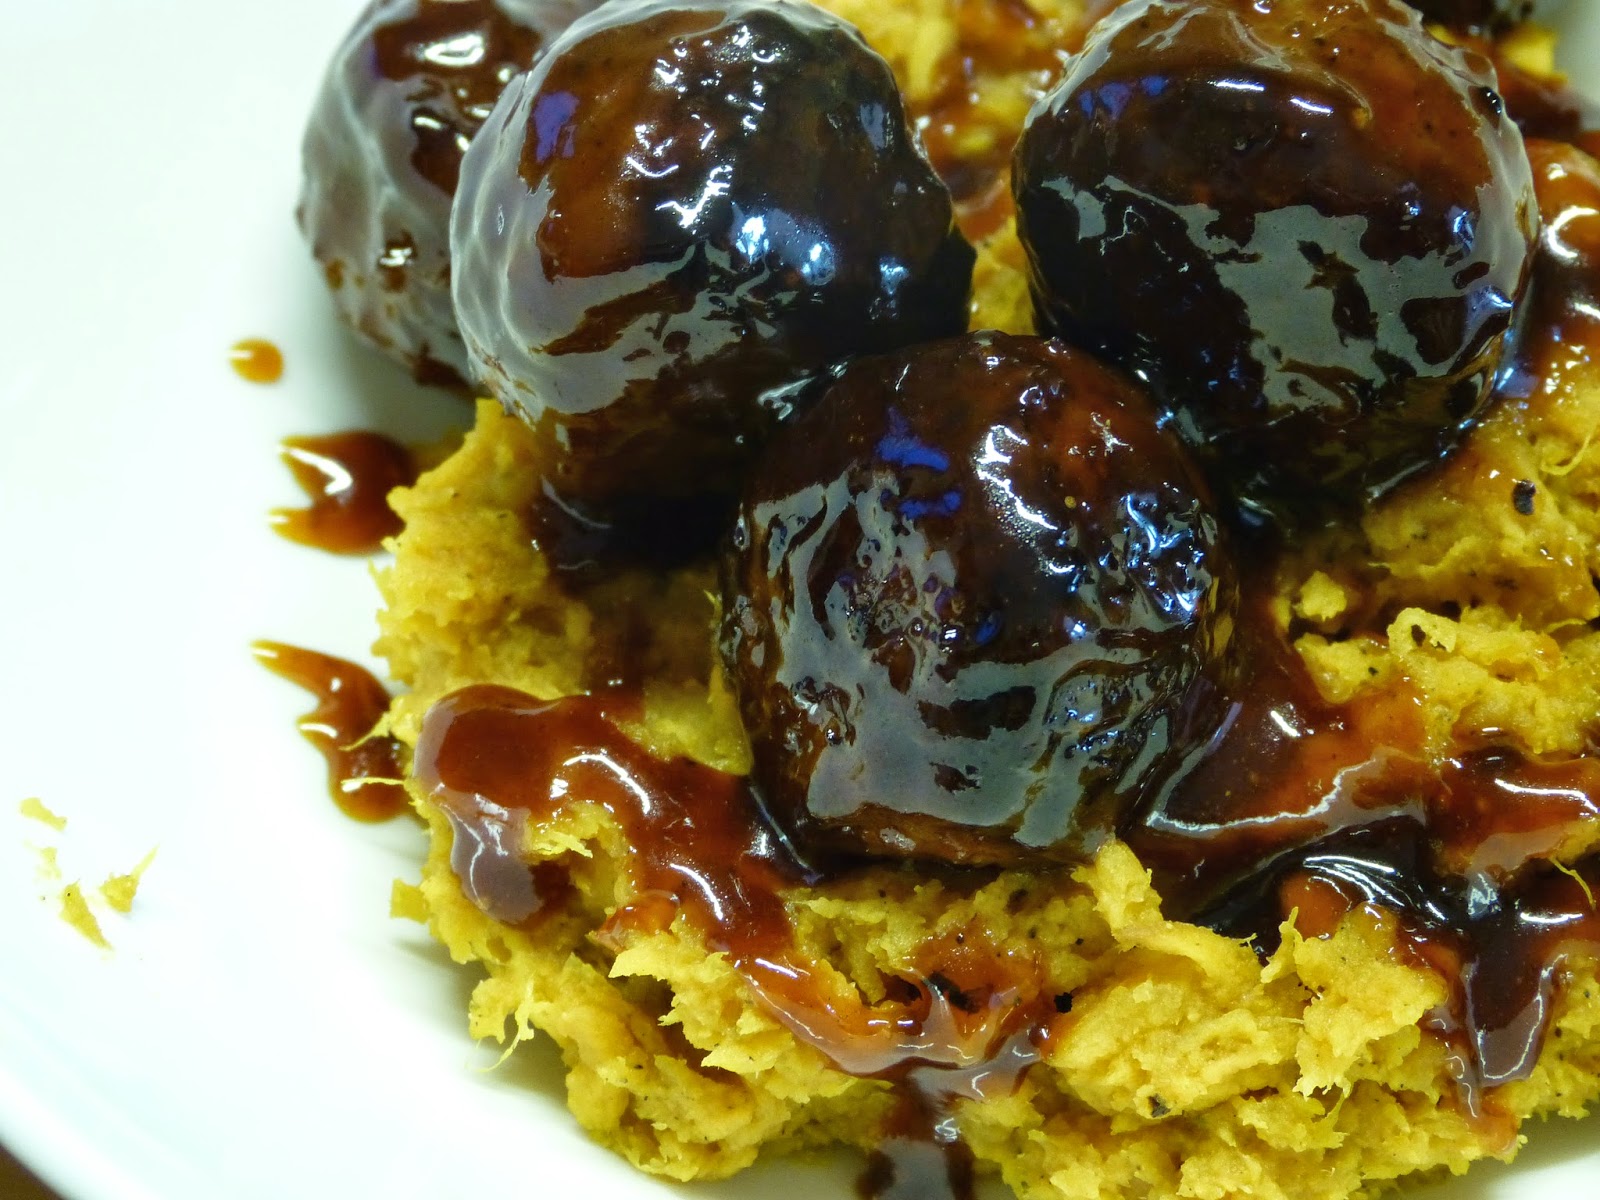 Recipe #2: Sticky honey meatballs & sweet potato mash